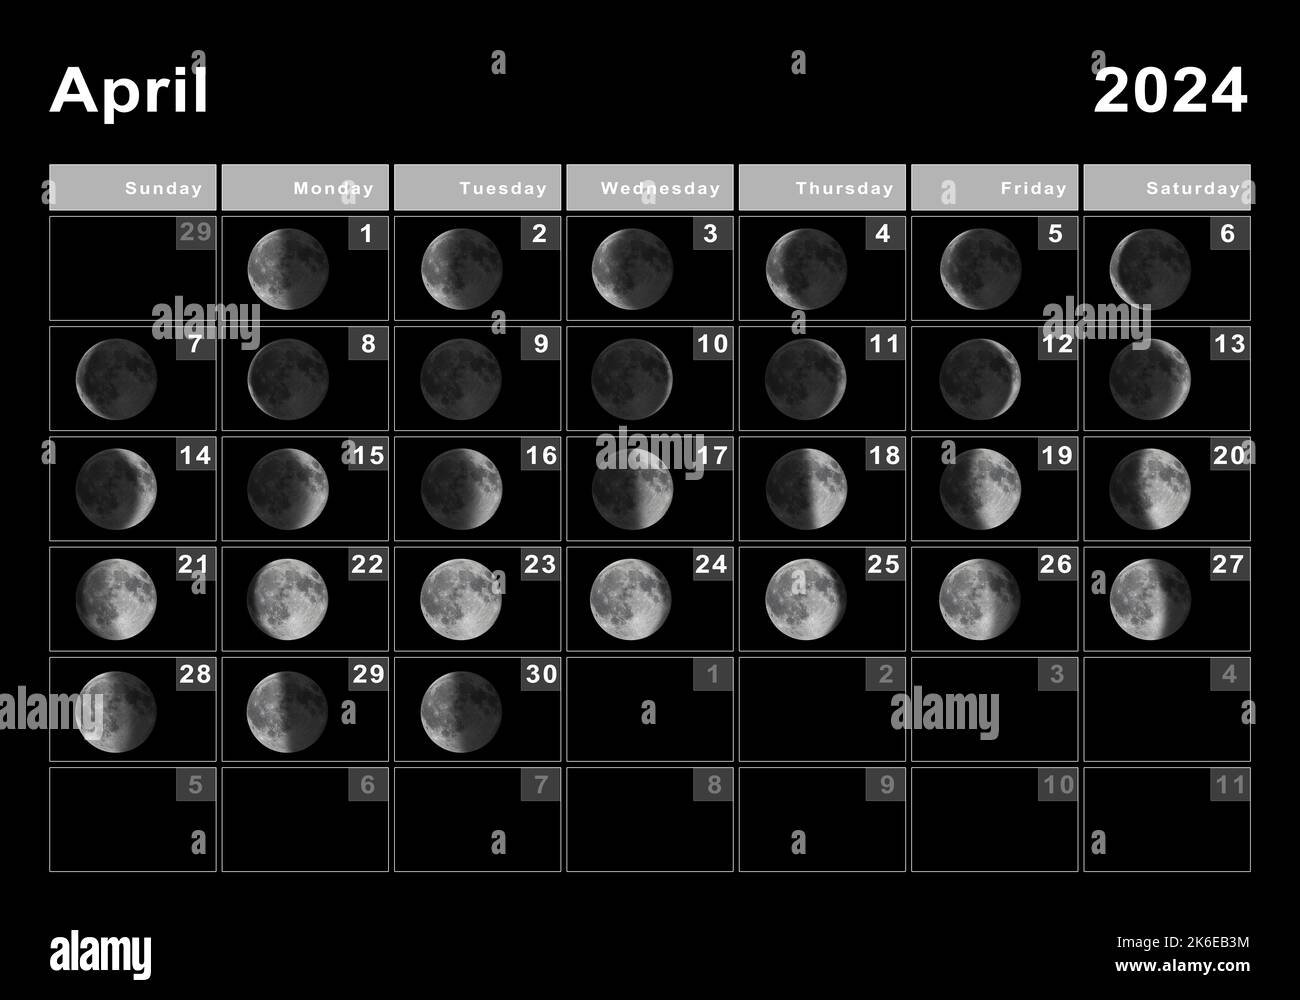 April 2024 Lunar Calendar, Moon Cycles, Moon Phases Stock Photo within April Lunar Calendar 2024